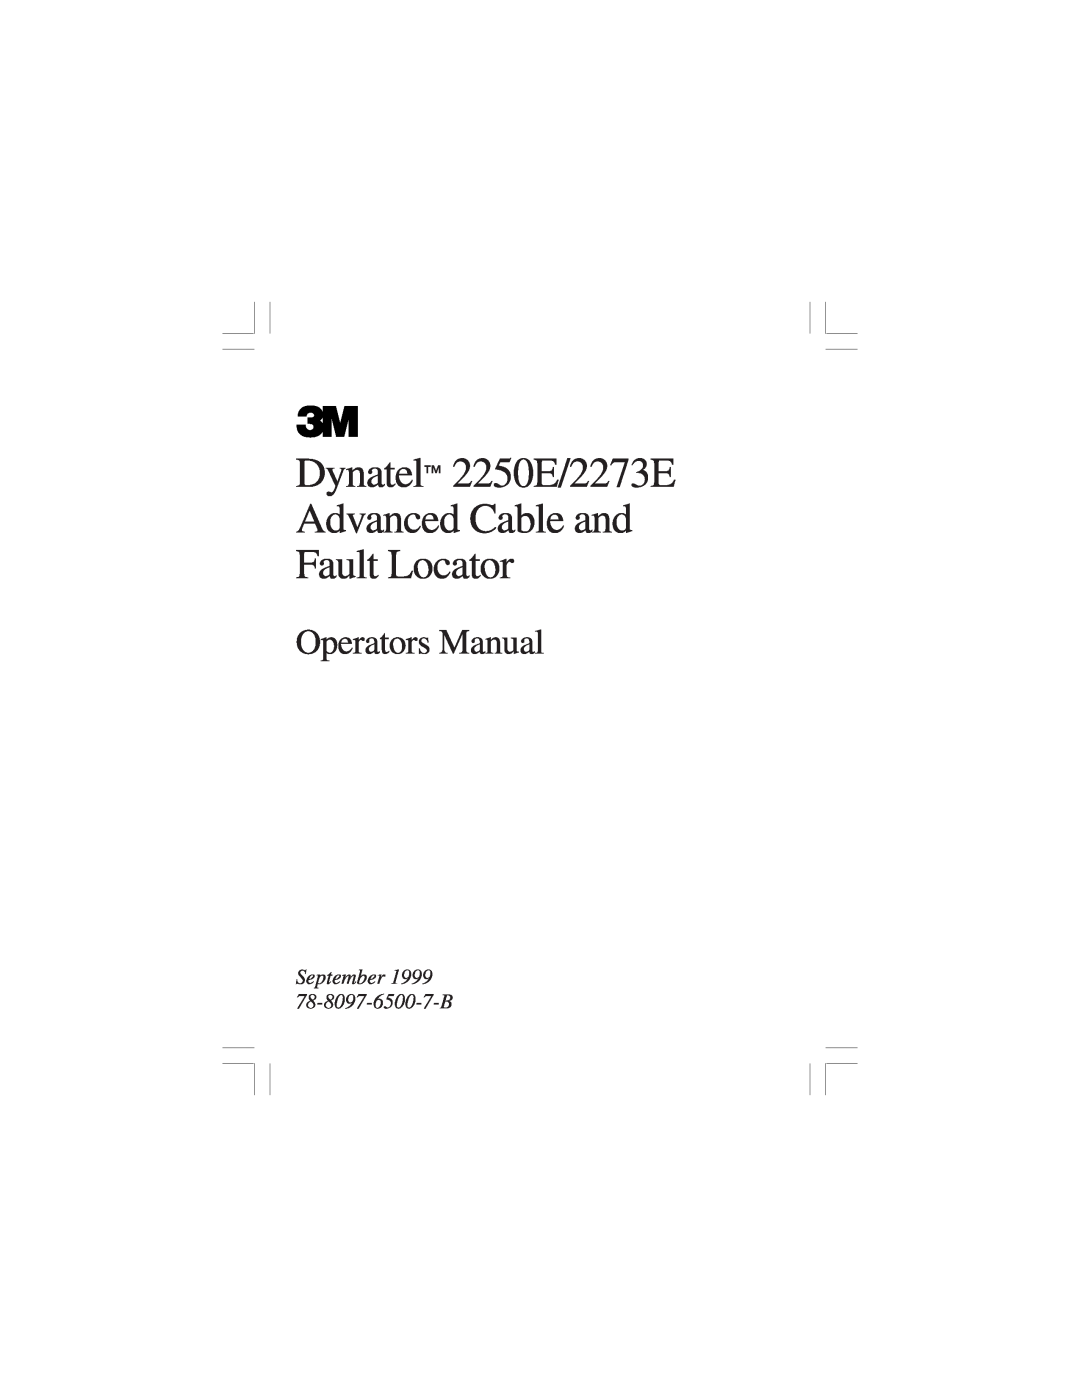 3M manual Dynatel 2250E/2273E Advanced Cable and, Fault Locator, Operators Manual, September 1999 78-8097-6500-7-B 